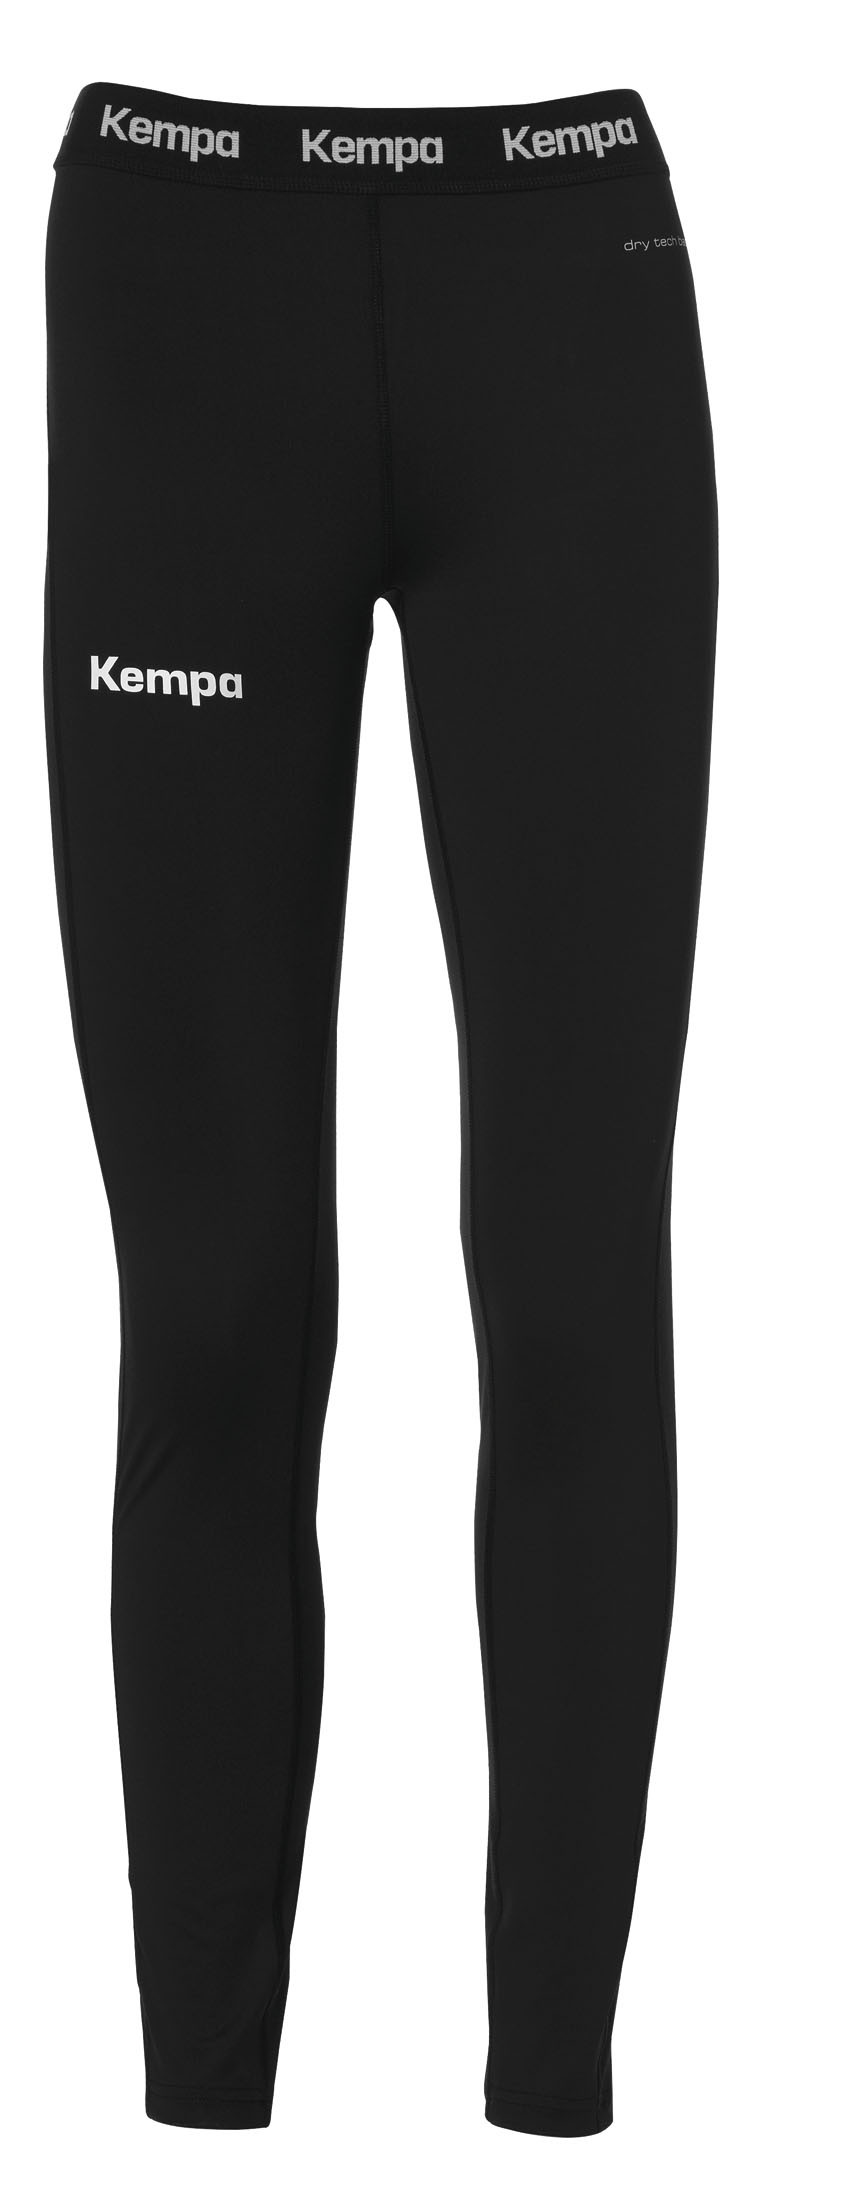 Kempa Training Leggings Damen